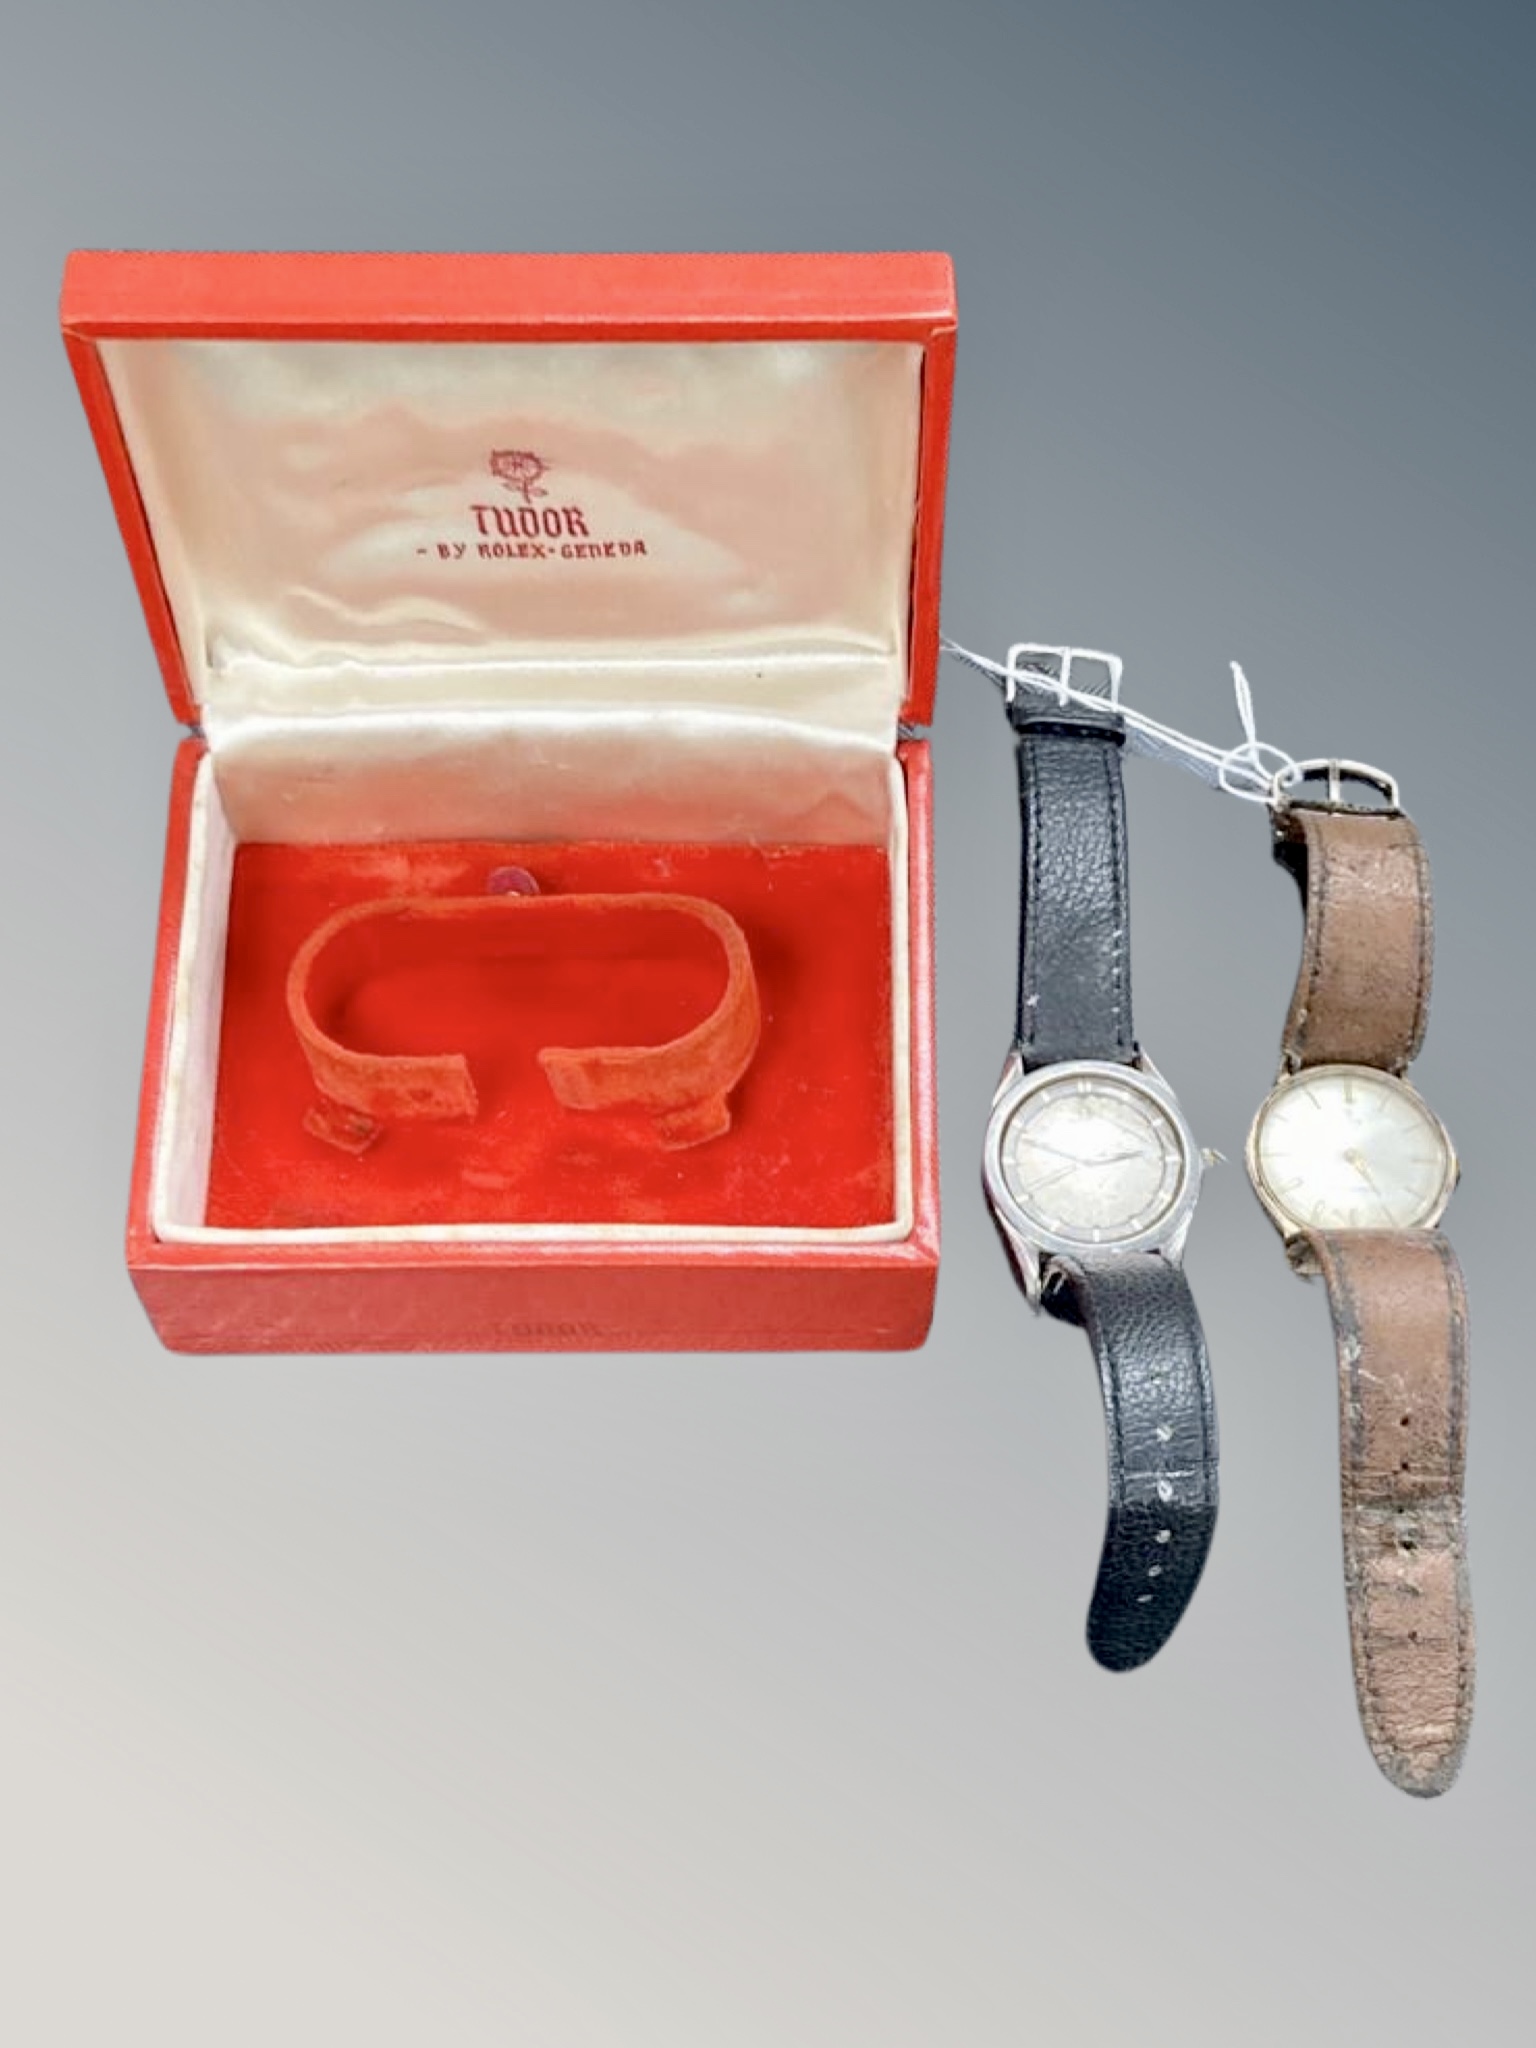 A Gentleman's Tudor Royal mid century wrist watch,